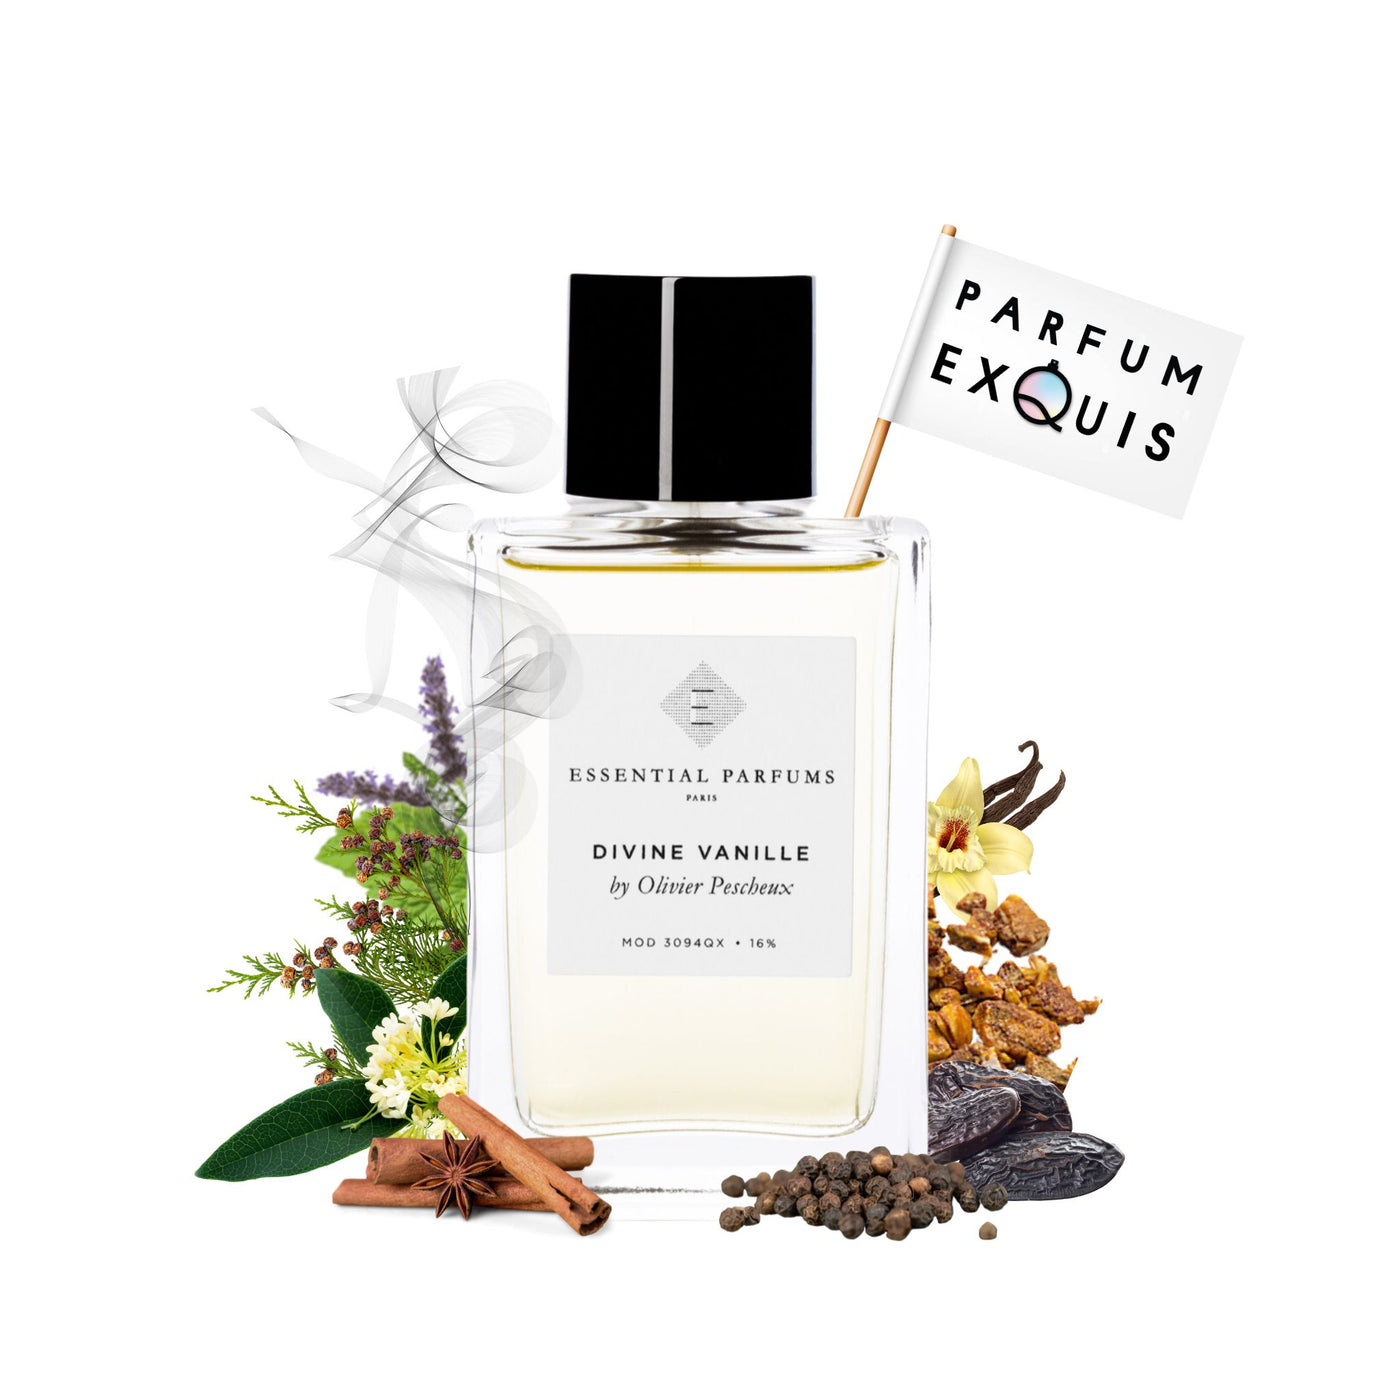 Divine Vanille Essential Parfums Notes